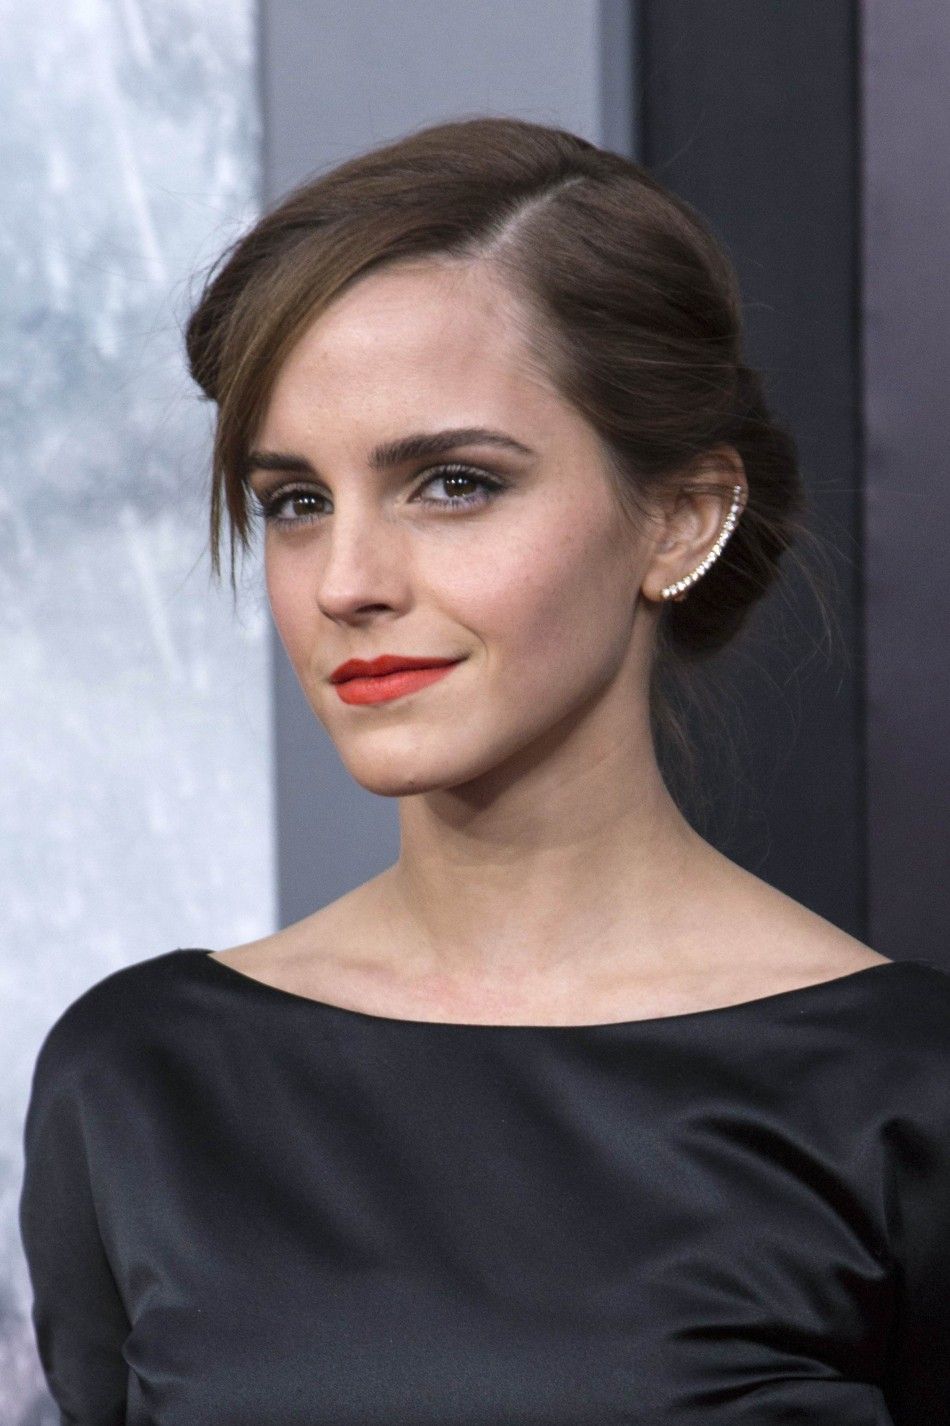 Cast member Emma Watson attends the U.S. premiere of quotNoahquot in New York March 26, 2014. REUTERSAndrew Kelly 